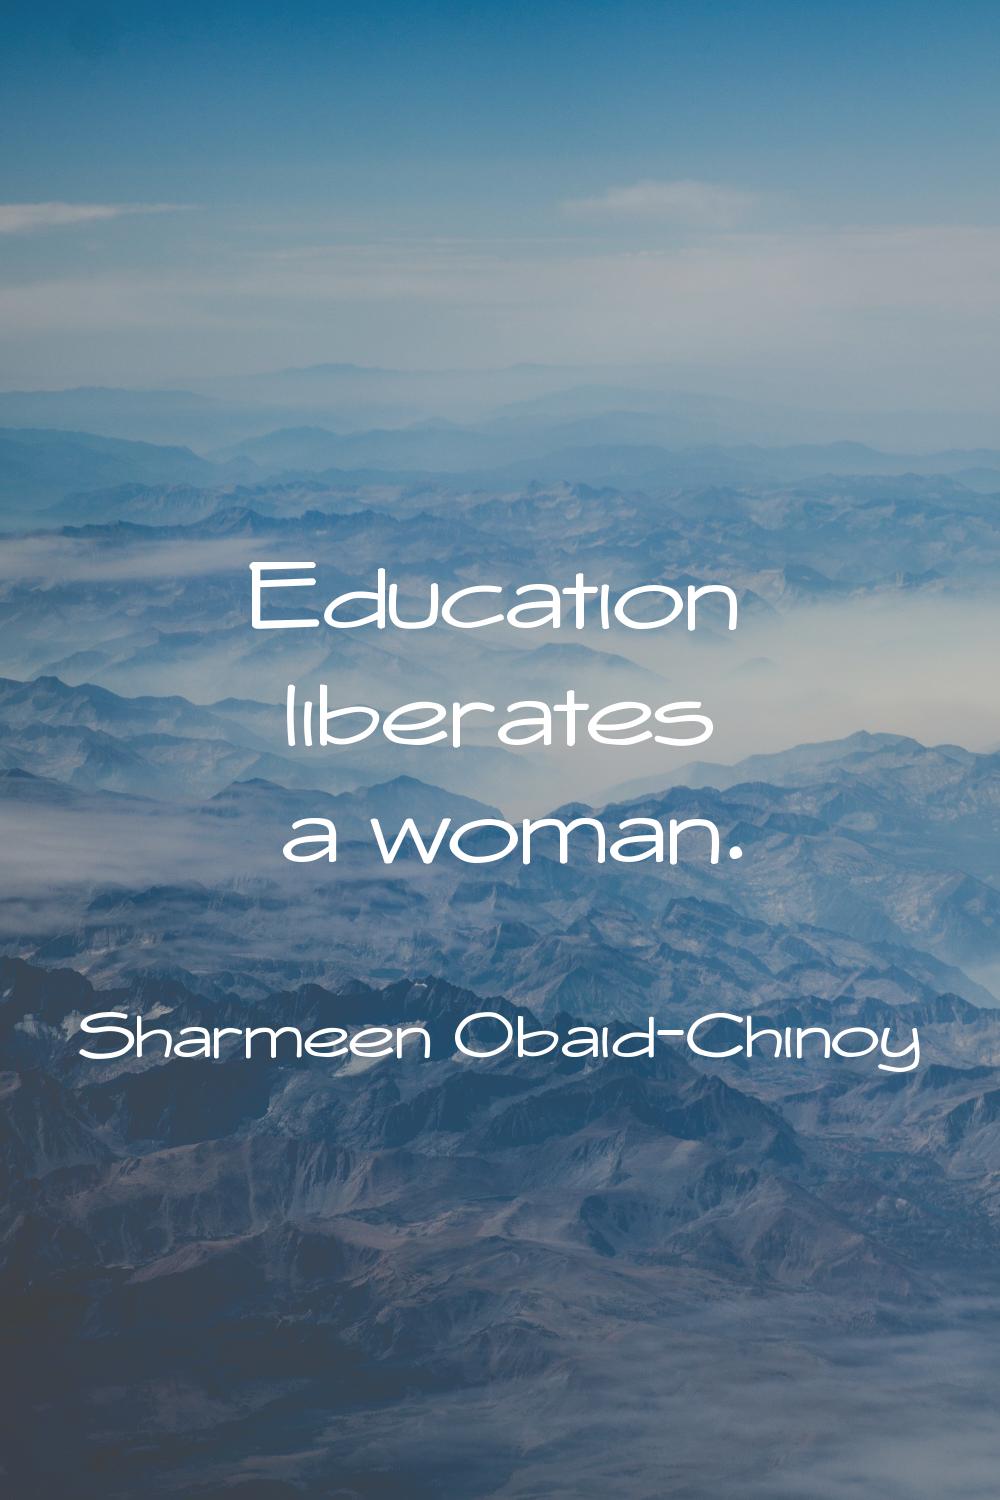 Education liberates a woman.